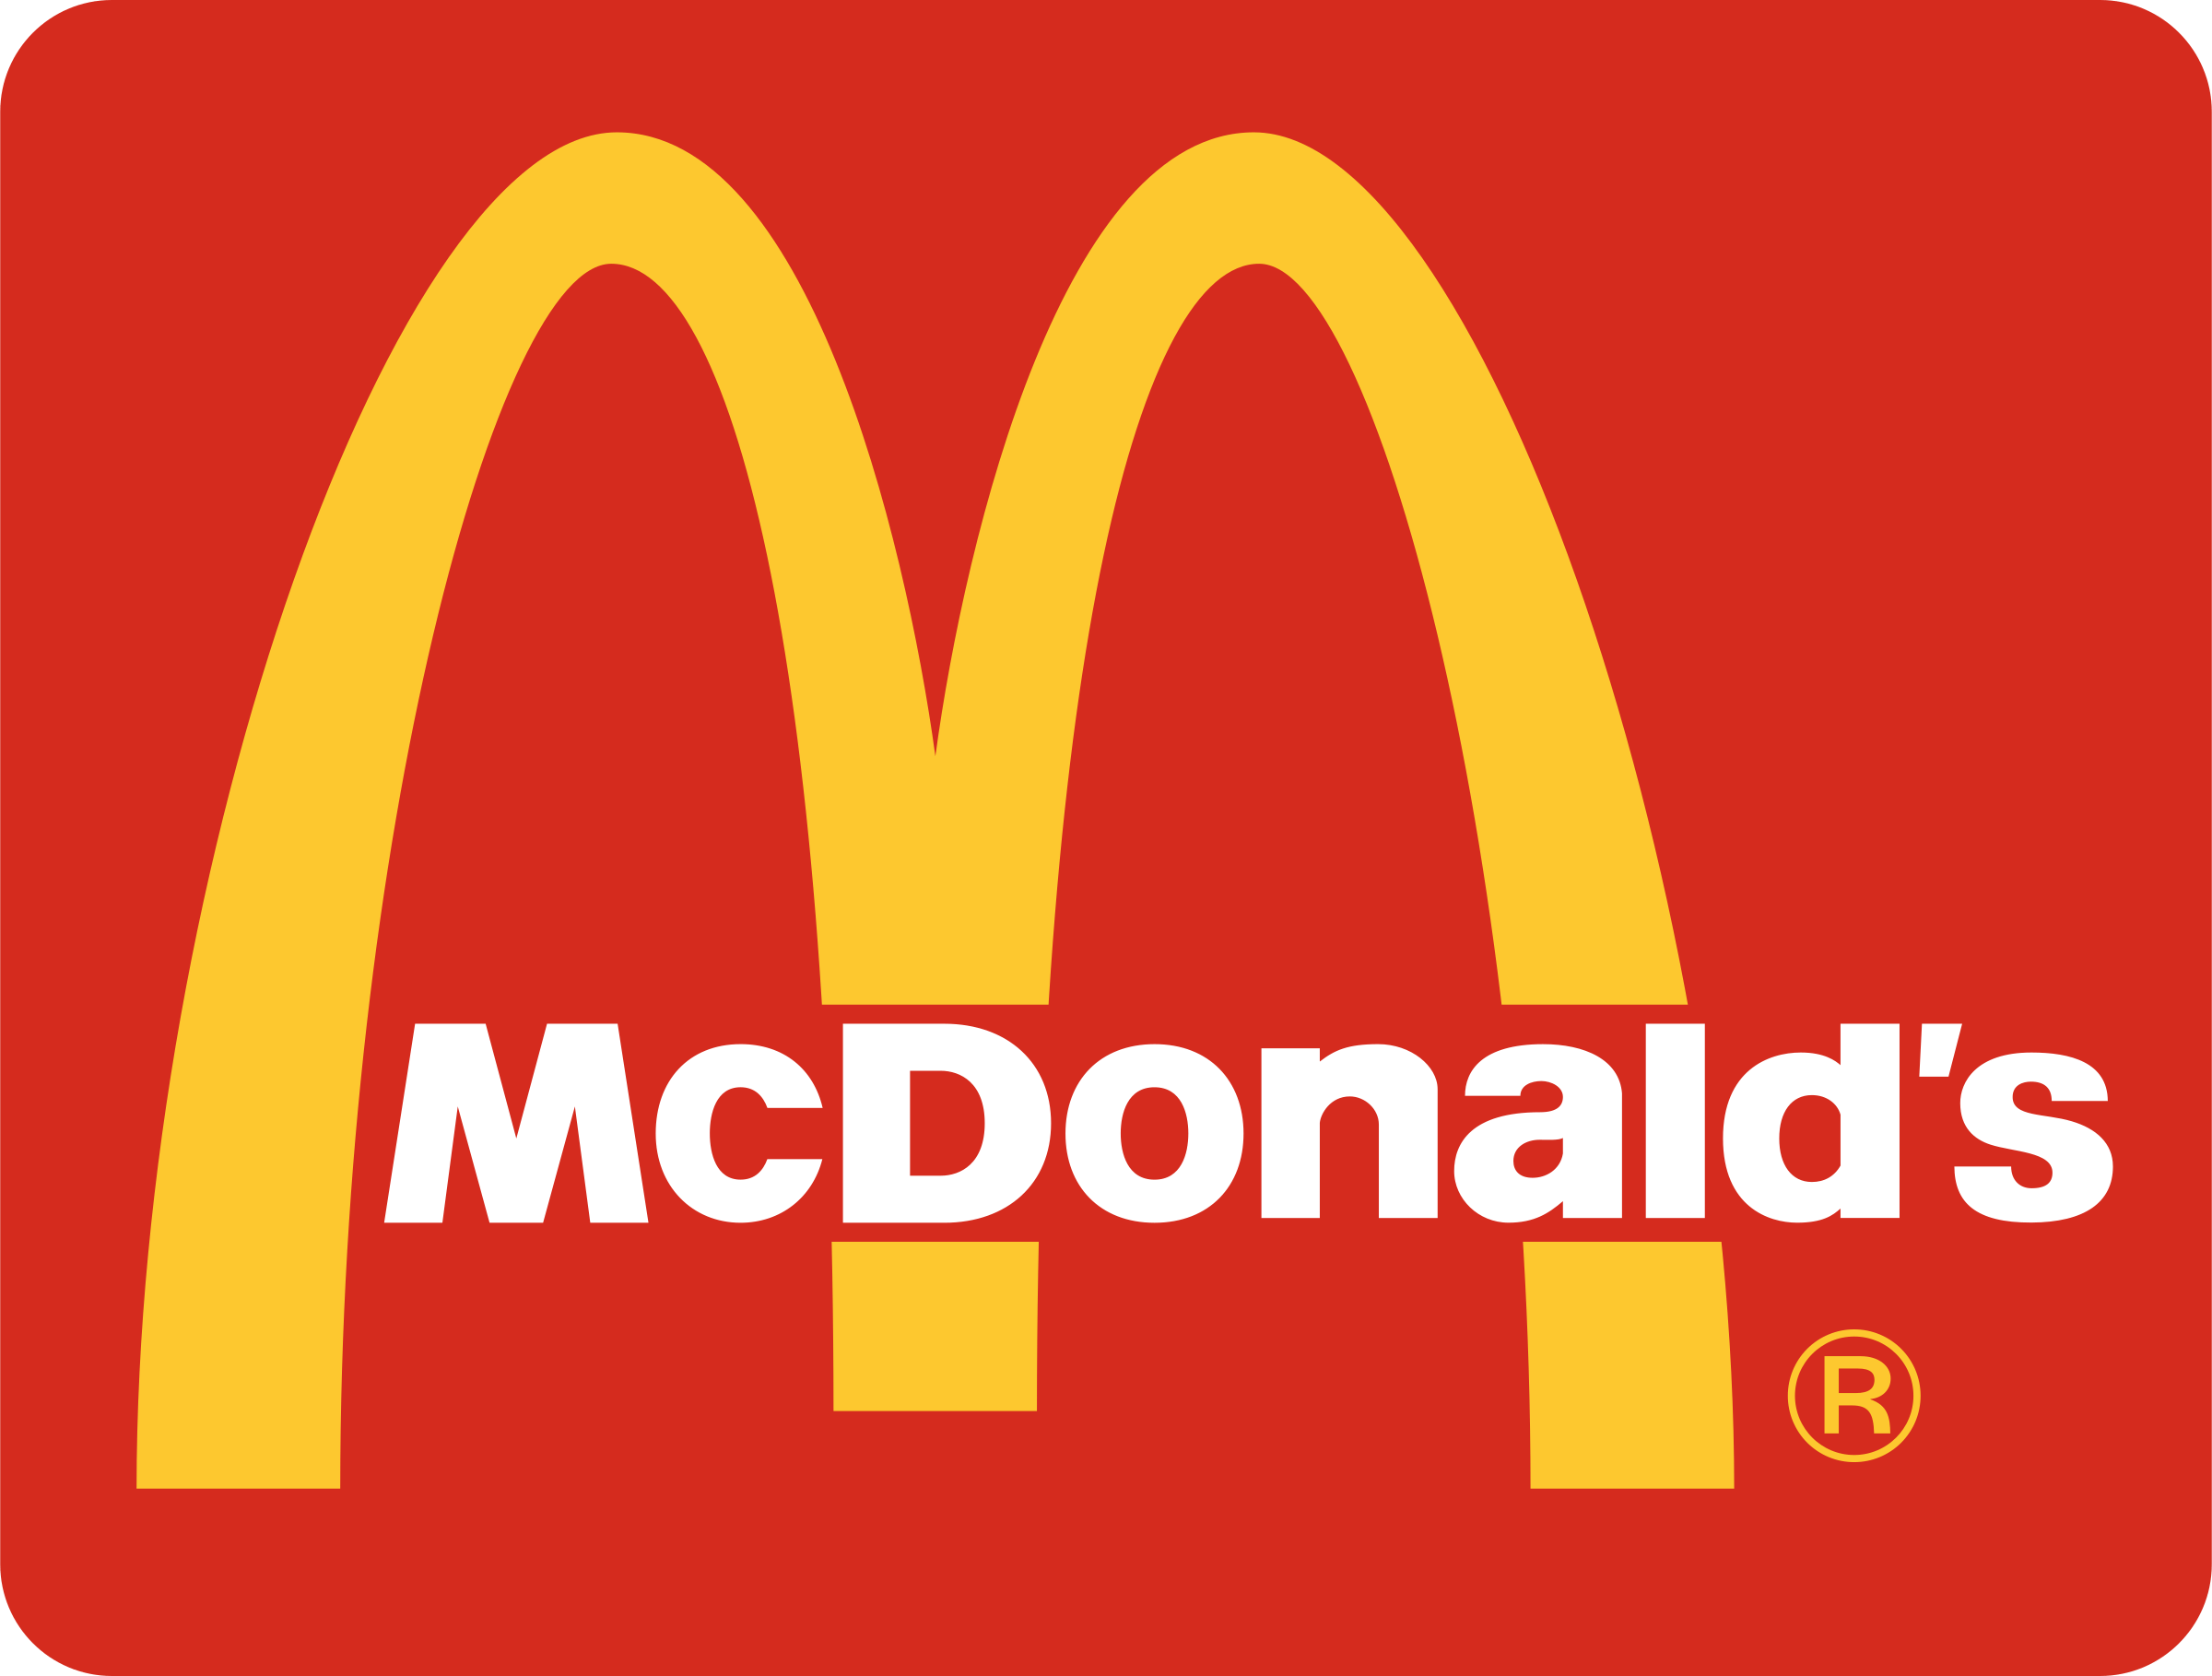 Chinese McDonald's Logo - McDonald's China Logo PNG Transparent & SVG Vector - Freebie Supply